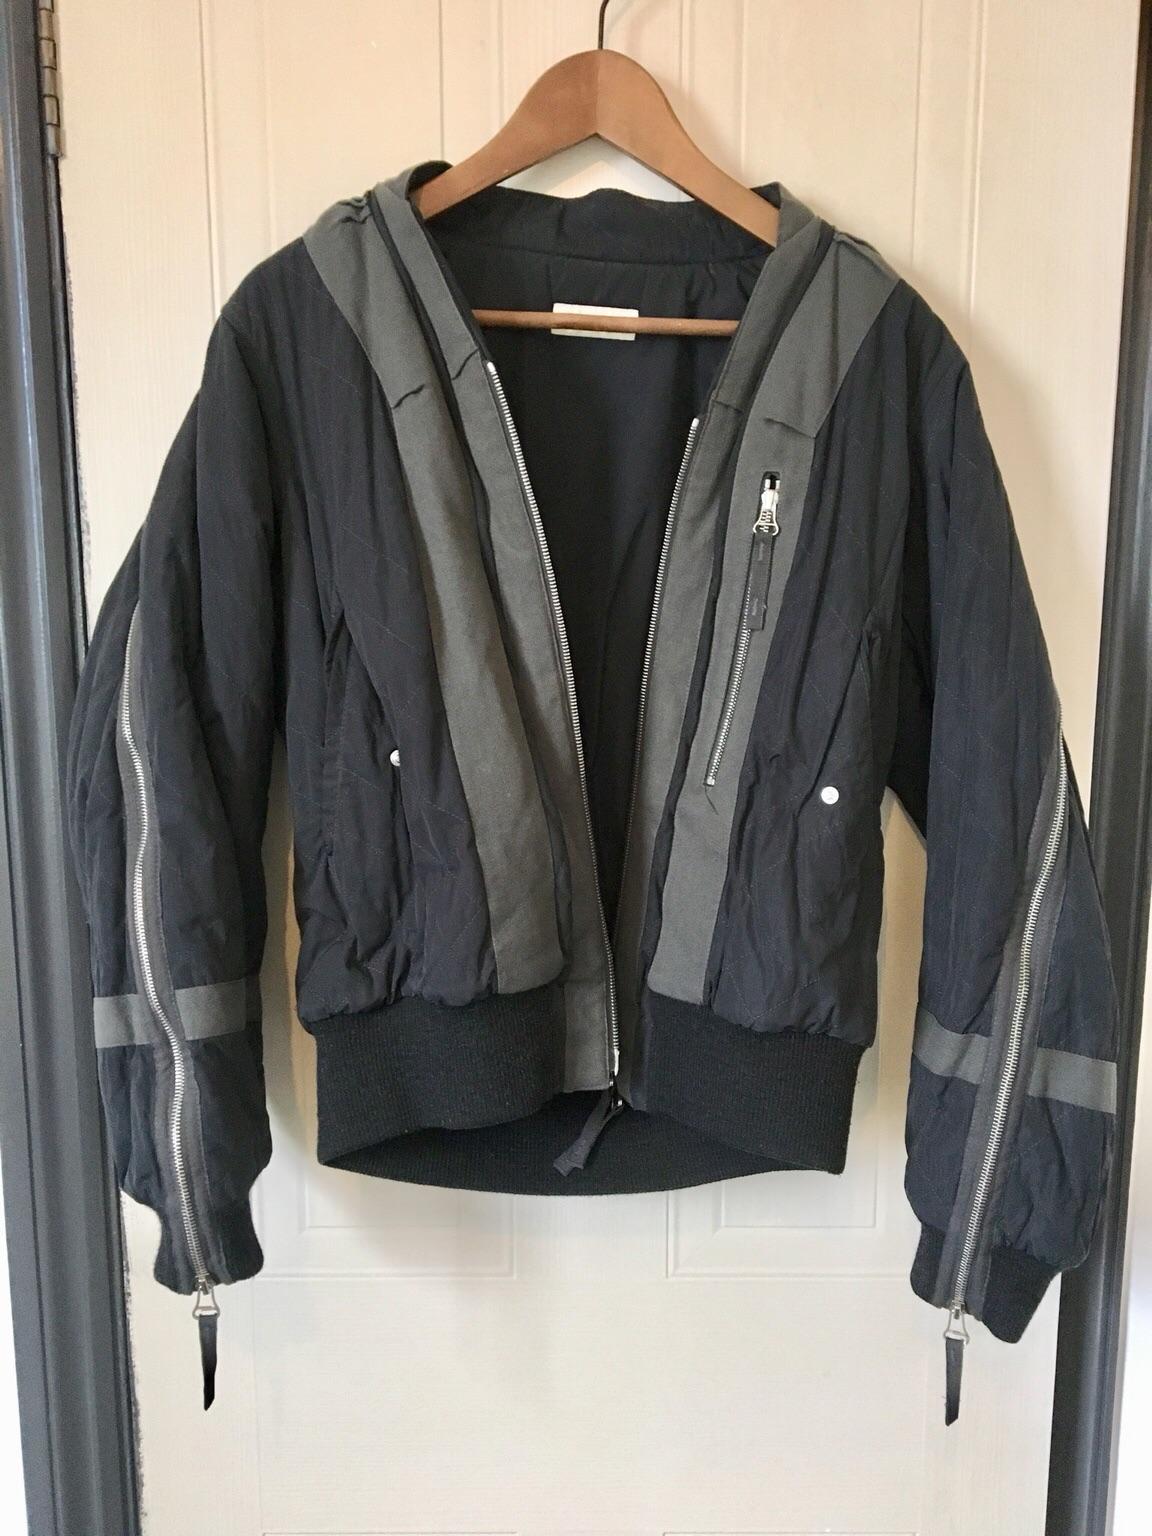 dries bomber jacket